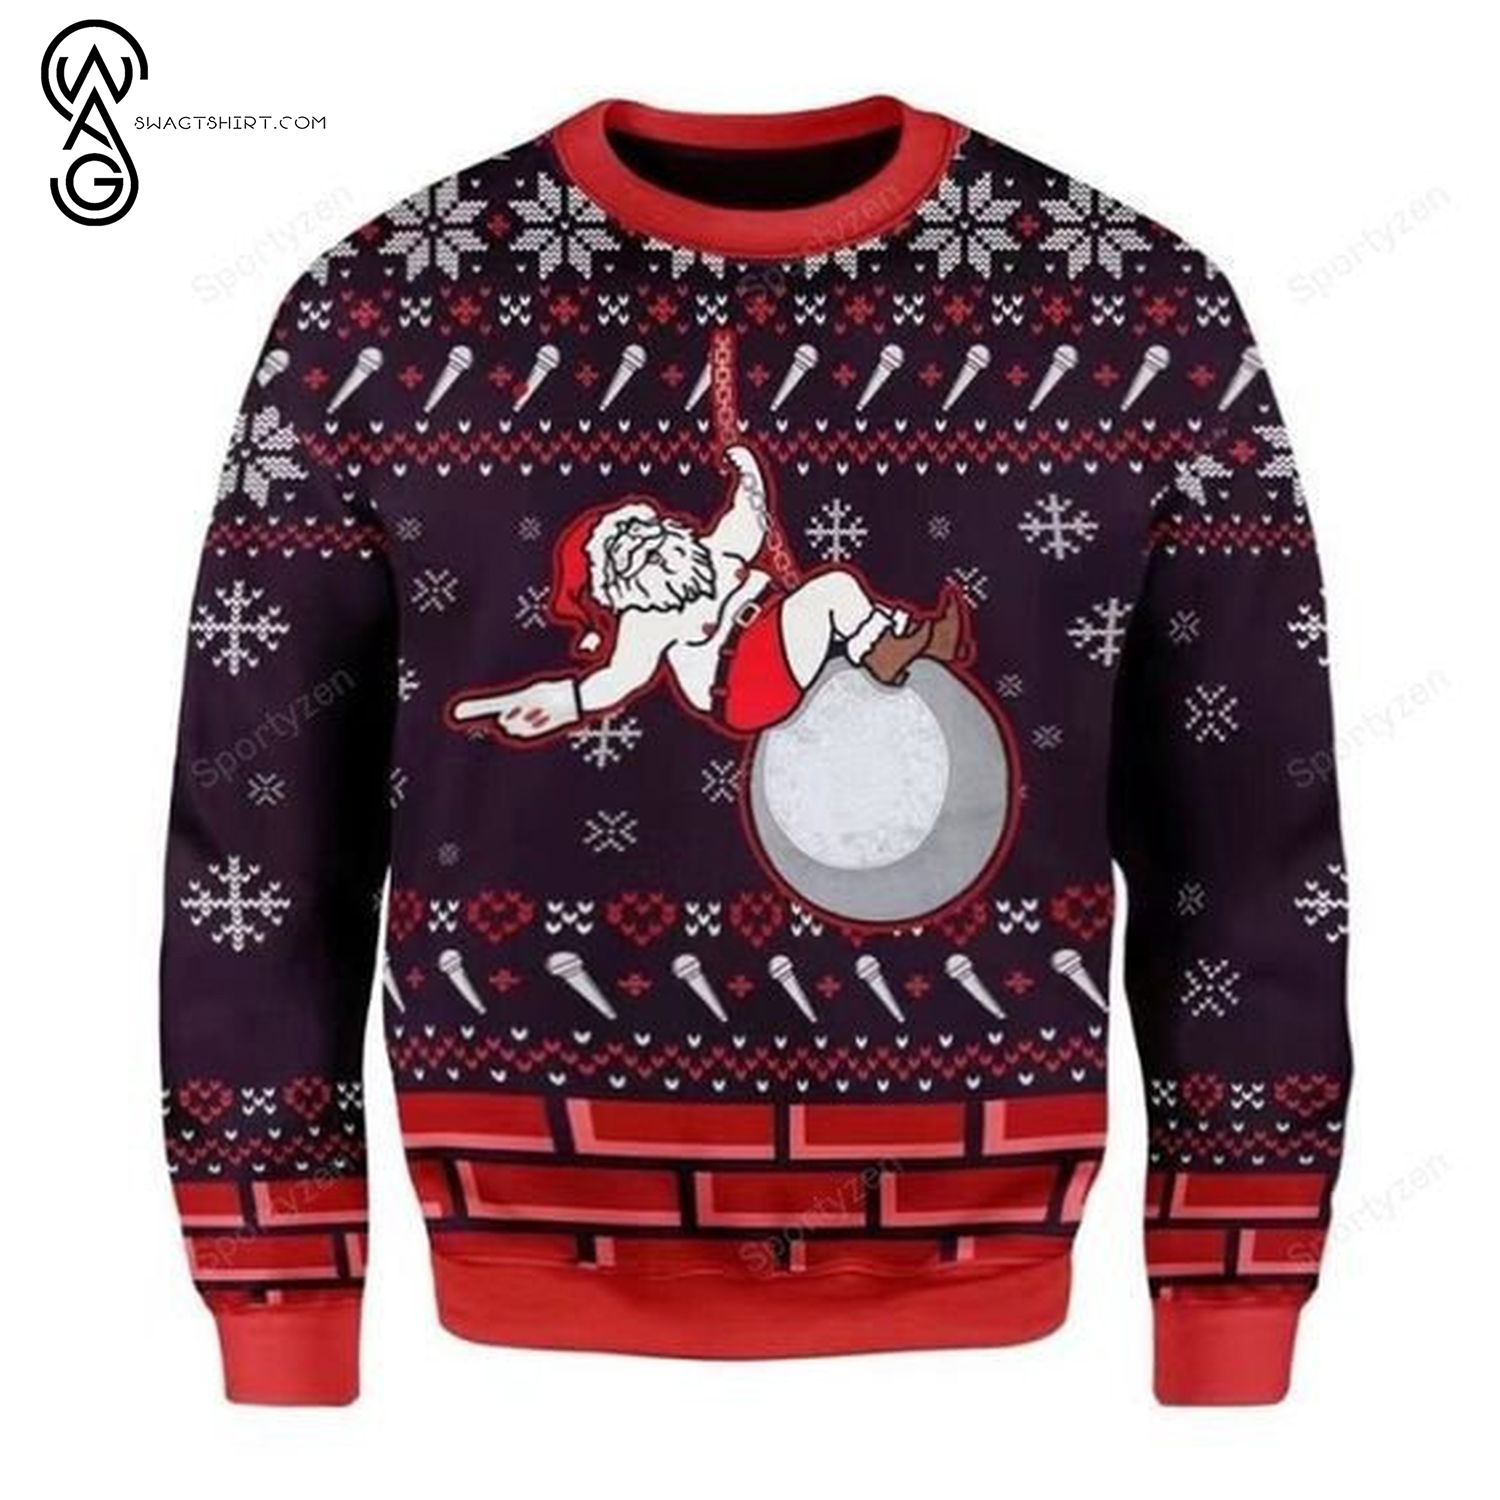 Santa On His Wrecking Ball Full Print Ugly Christmas Sweater